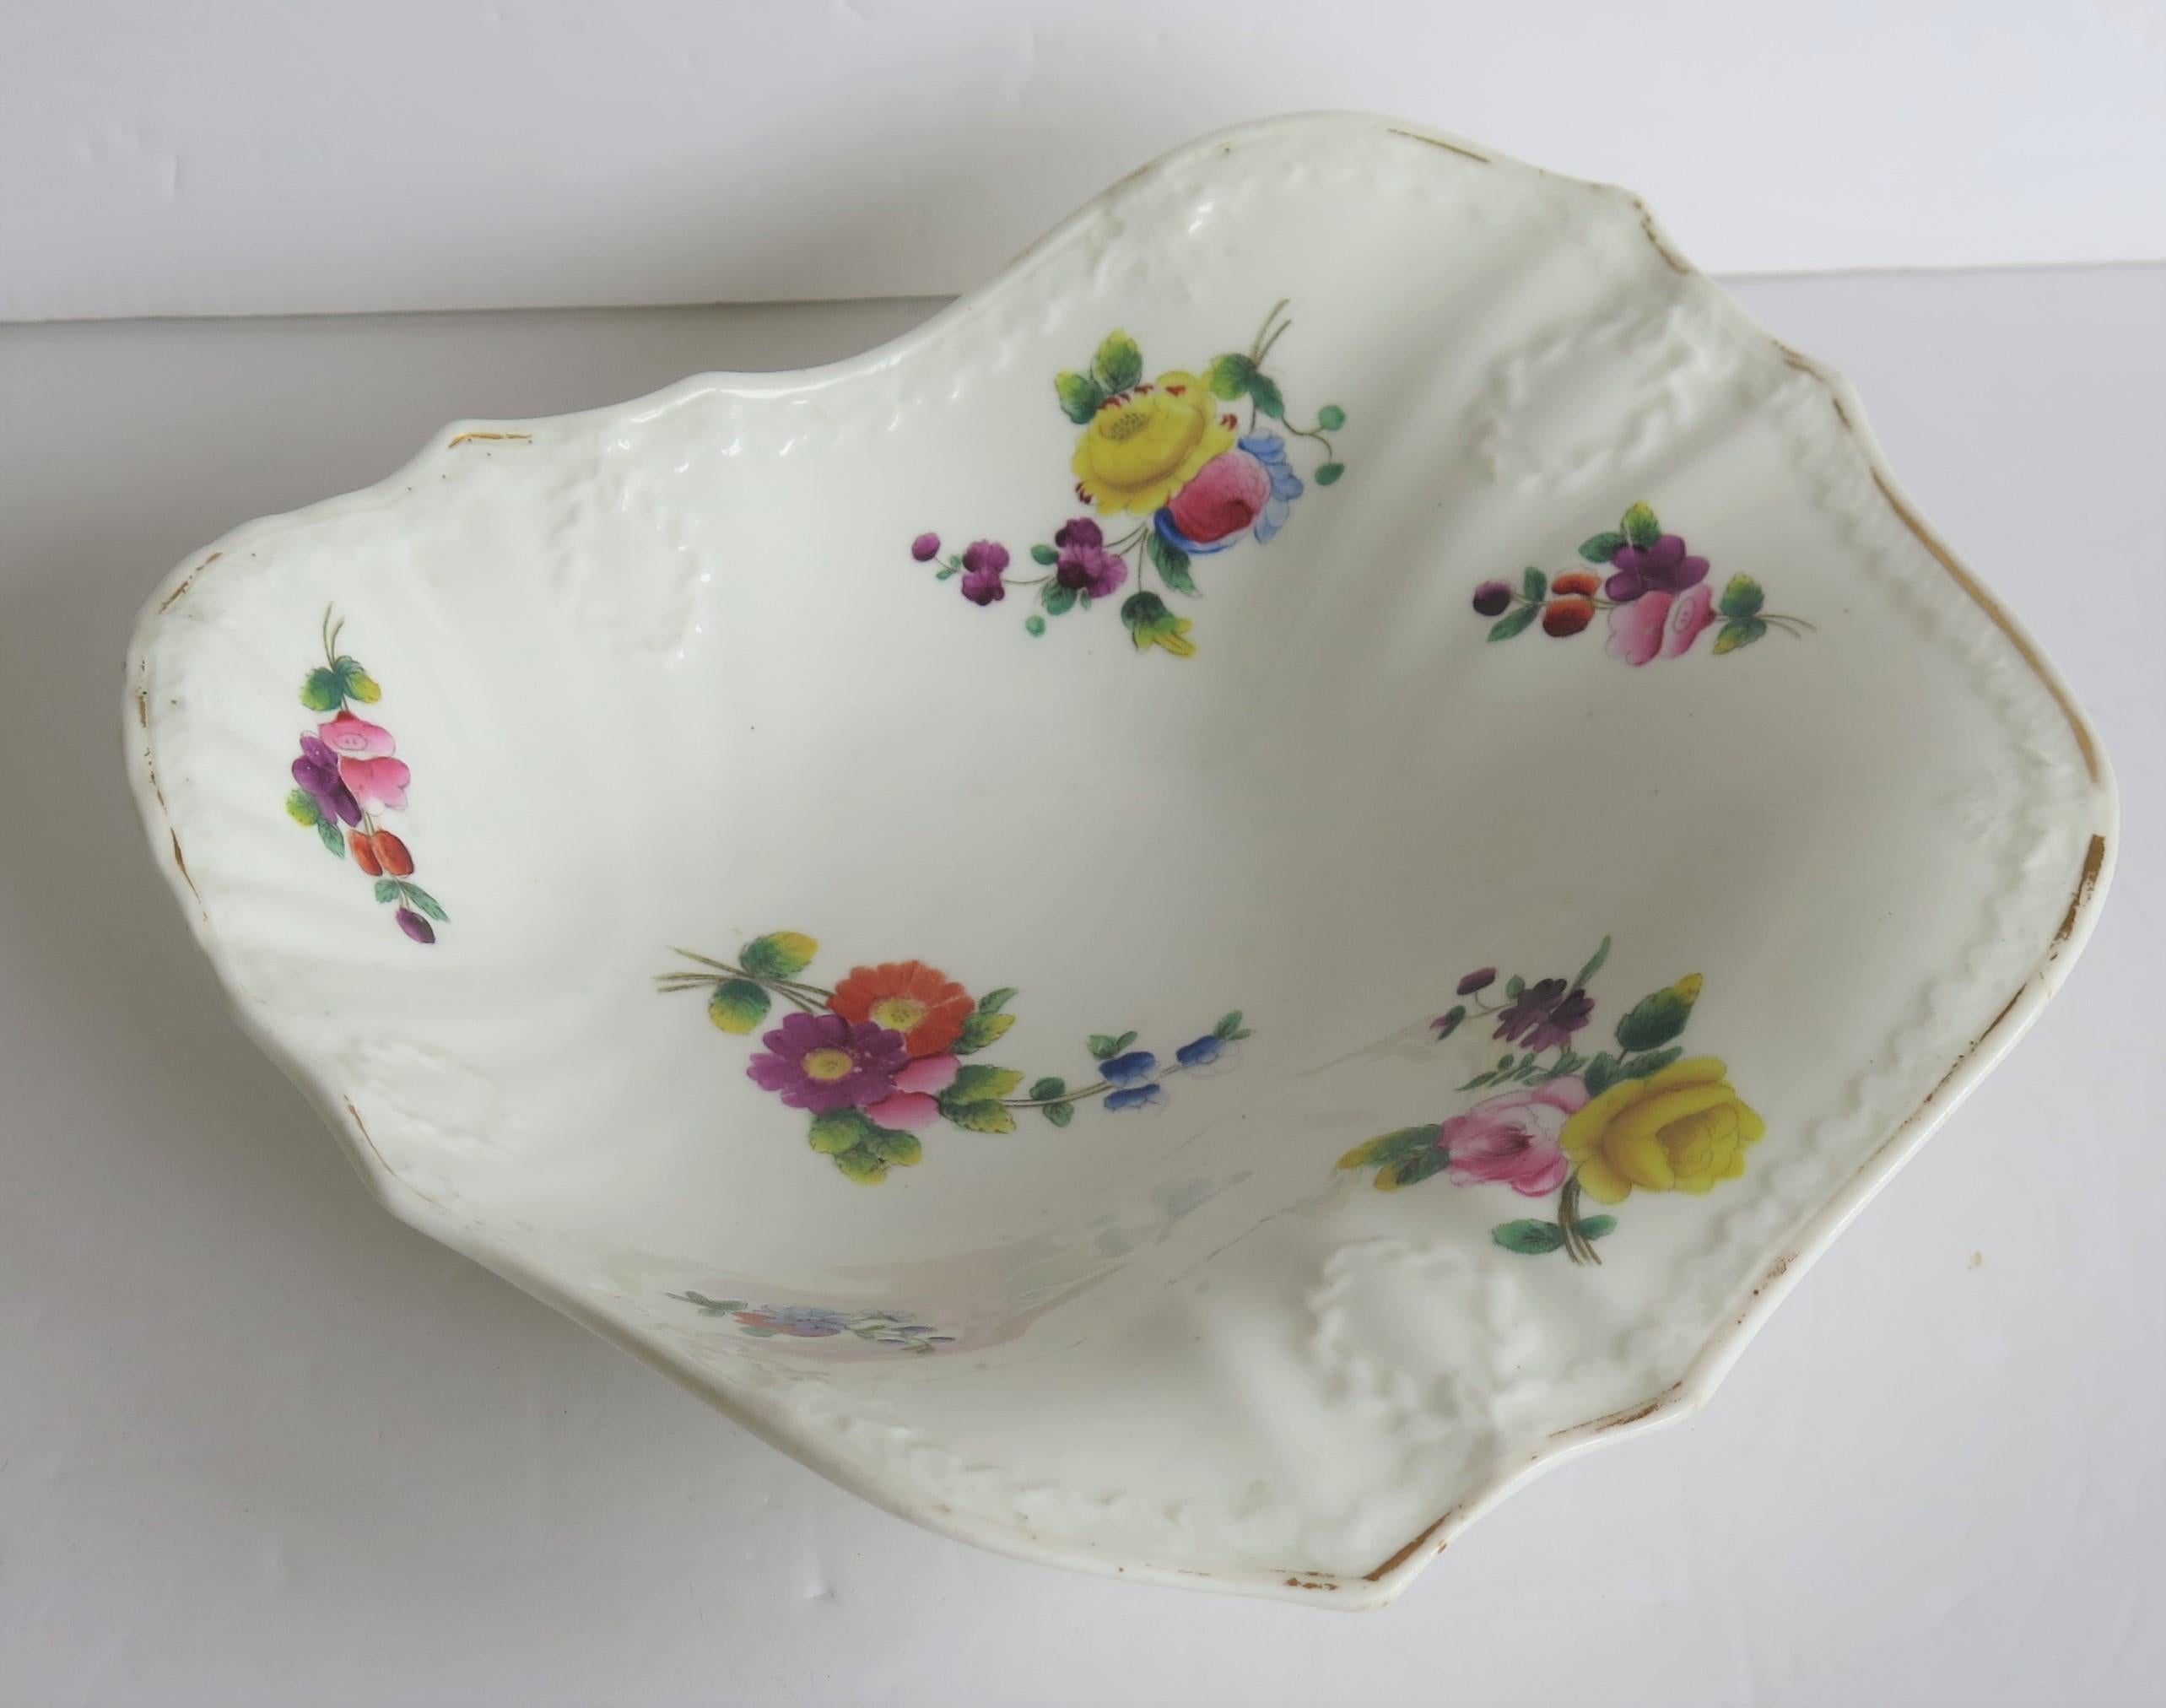 Regency Fine H & R Daniel Porcelain Shell Dish in Recorded Pattern 3884, circa 1830 For Sale